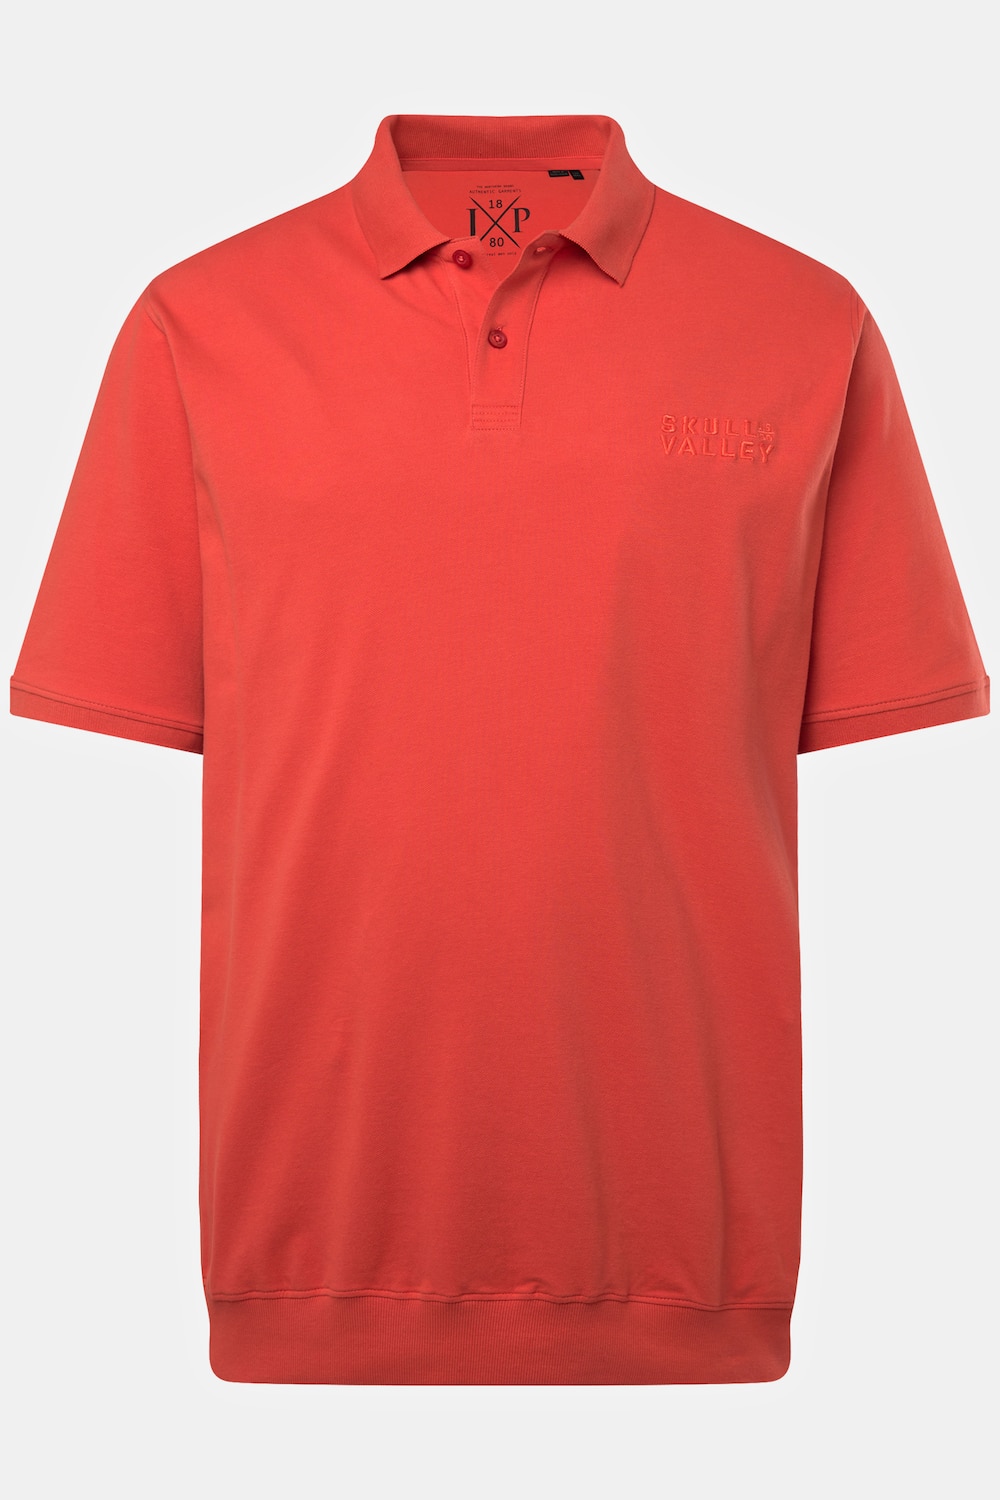 Grote Maten Poloshirt FLEXNAMIC®, Heren, rood, Maat: 7XL, Katoen, JP1880